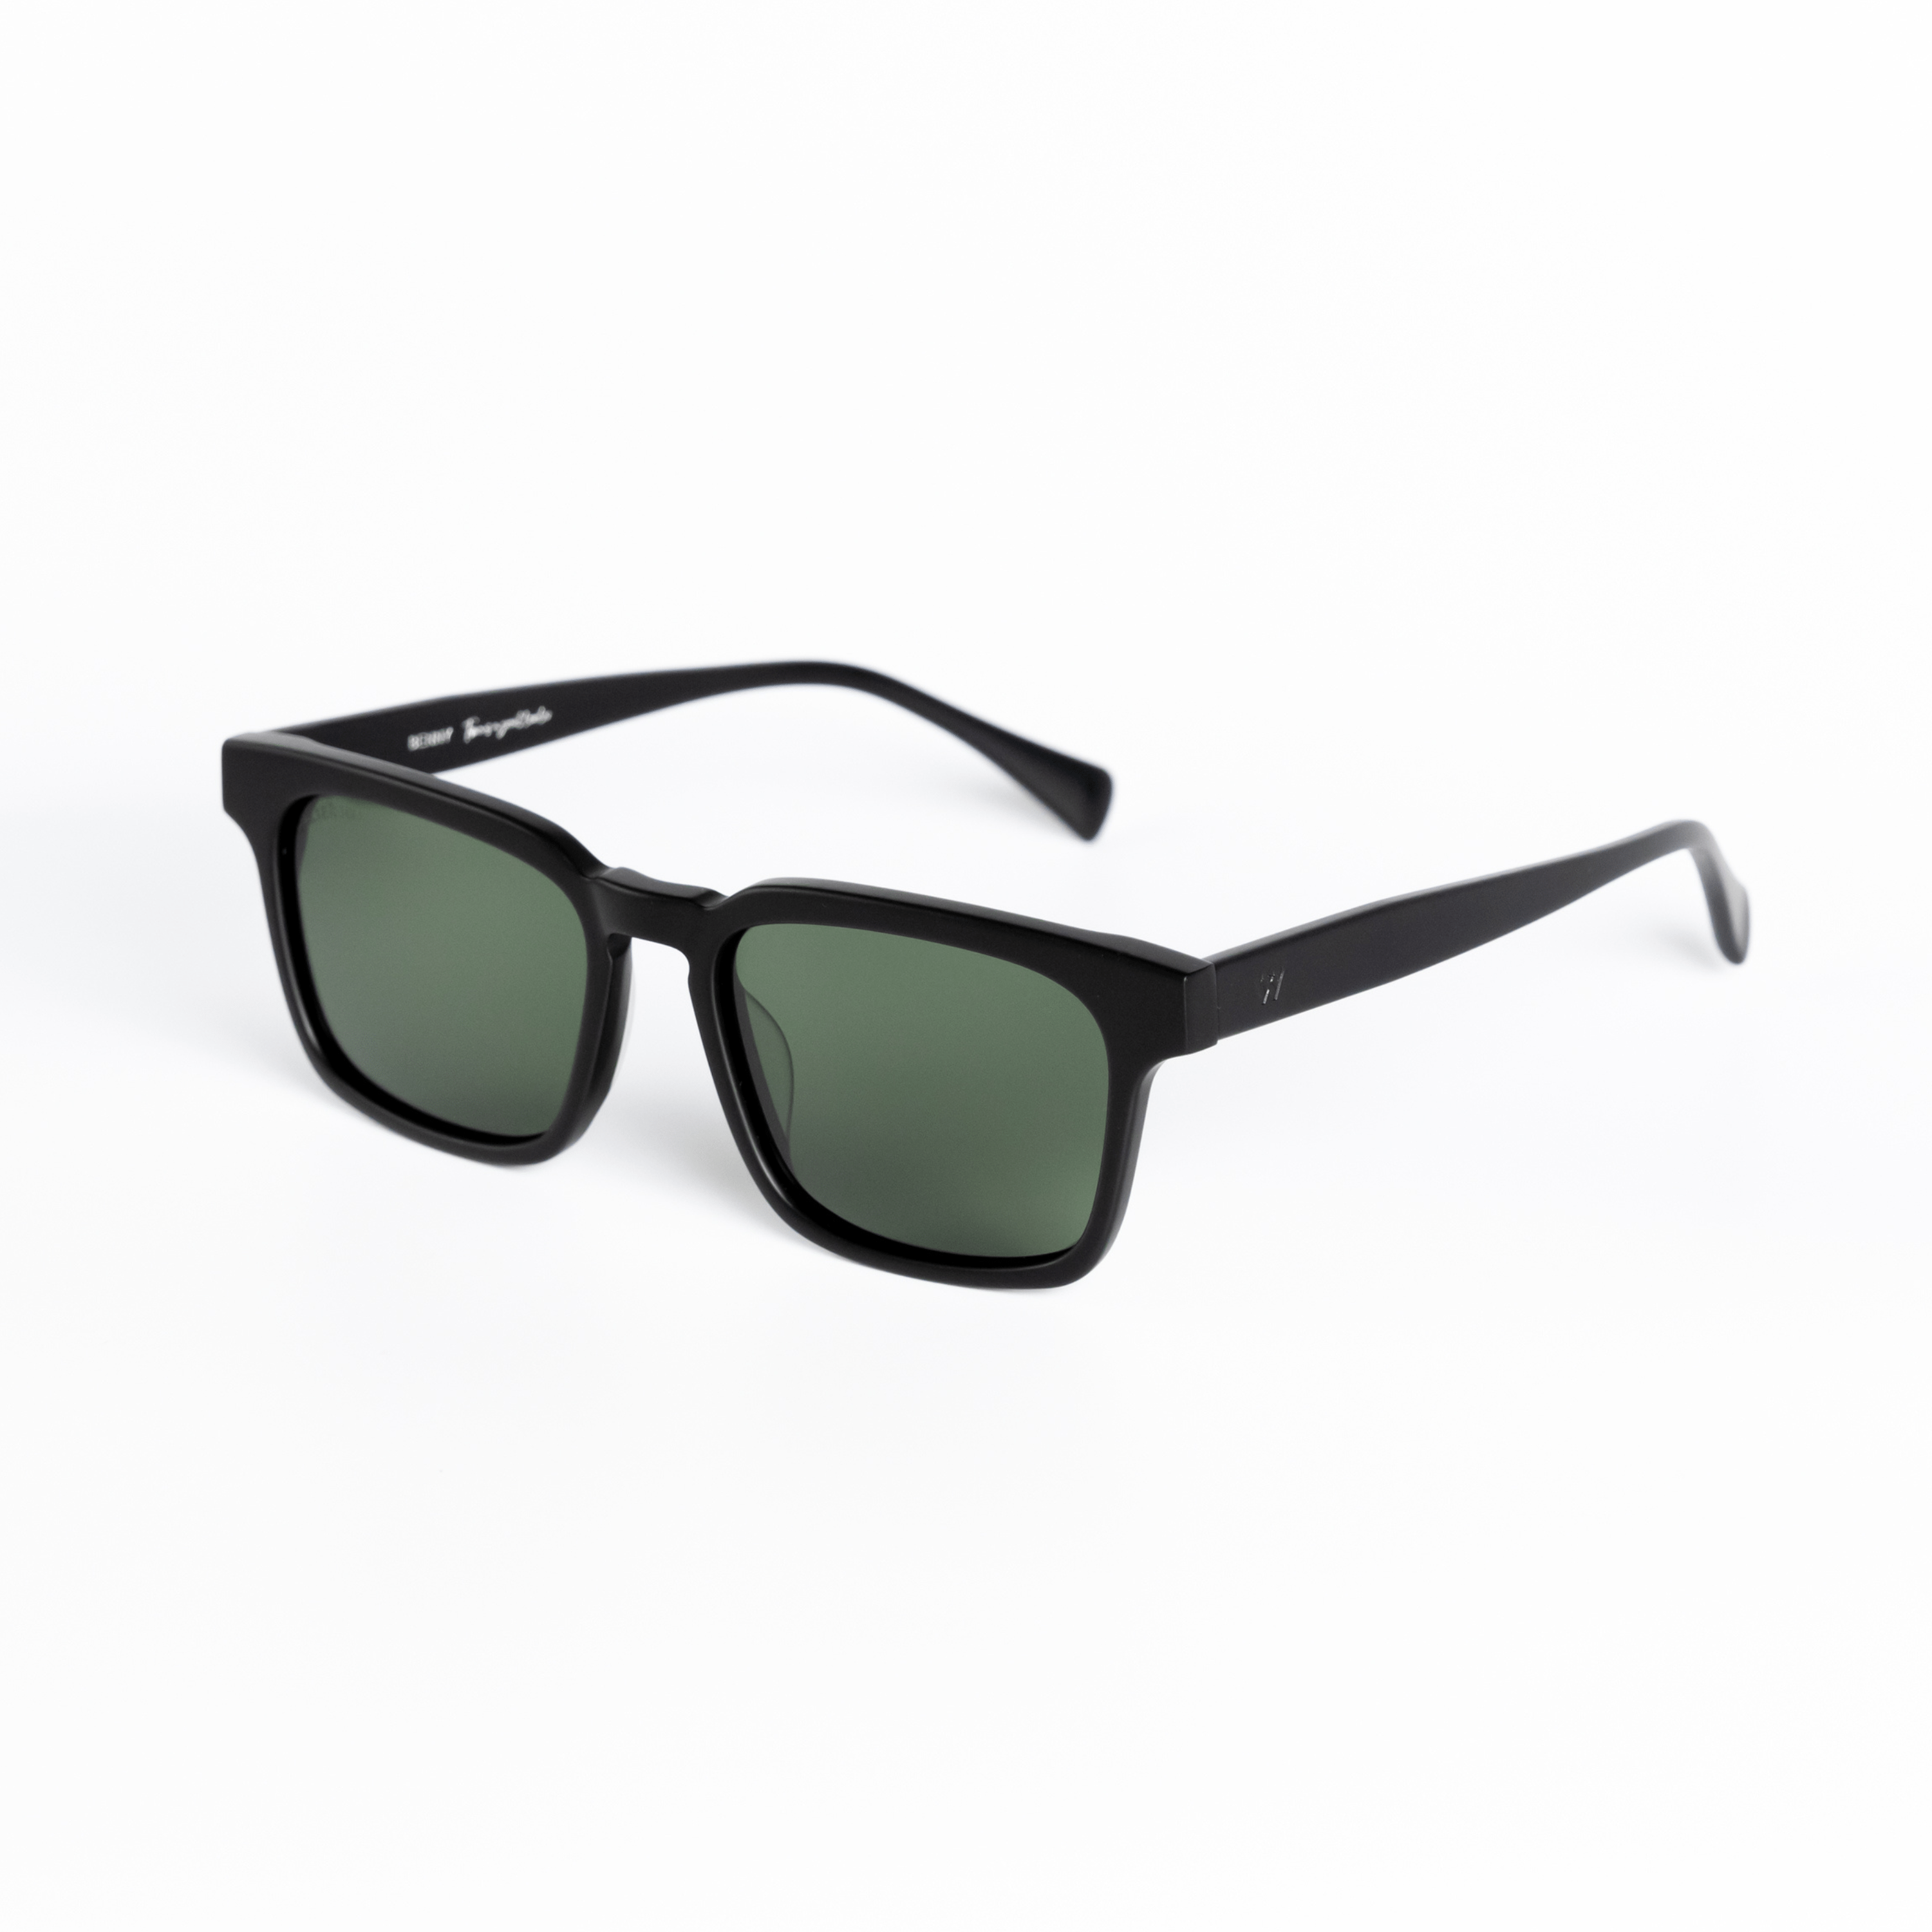 Walter Hill Sunglasses Standard / Polarized Cat.3 / Mazzucchelli Acetate BENNY - Matte Black